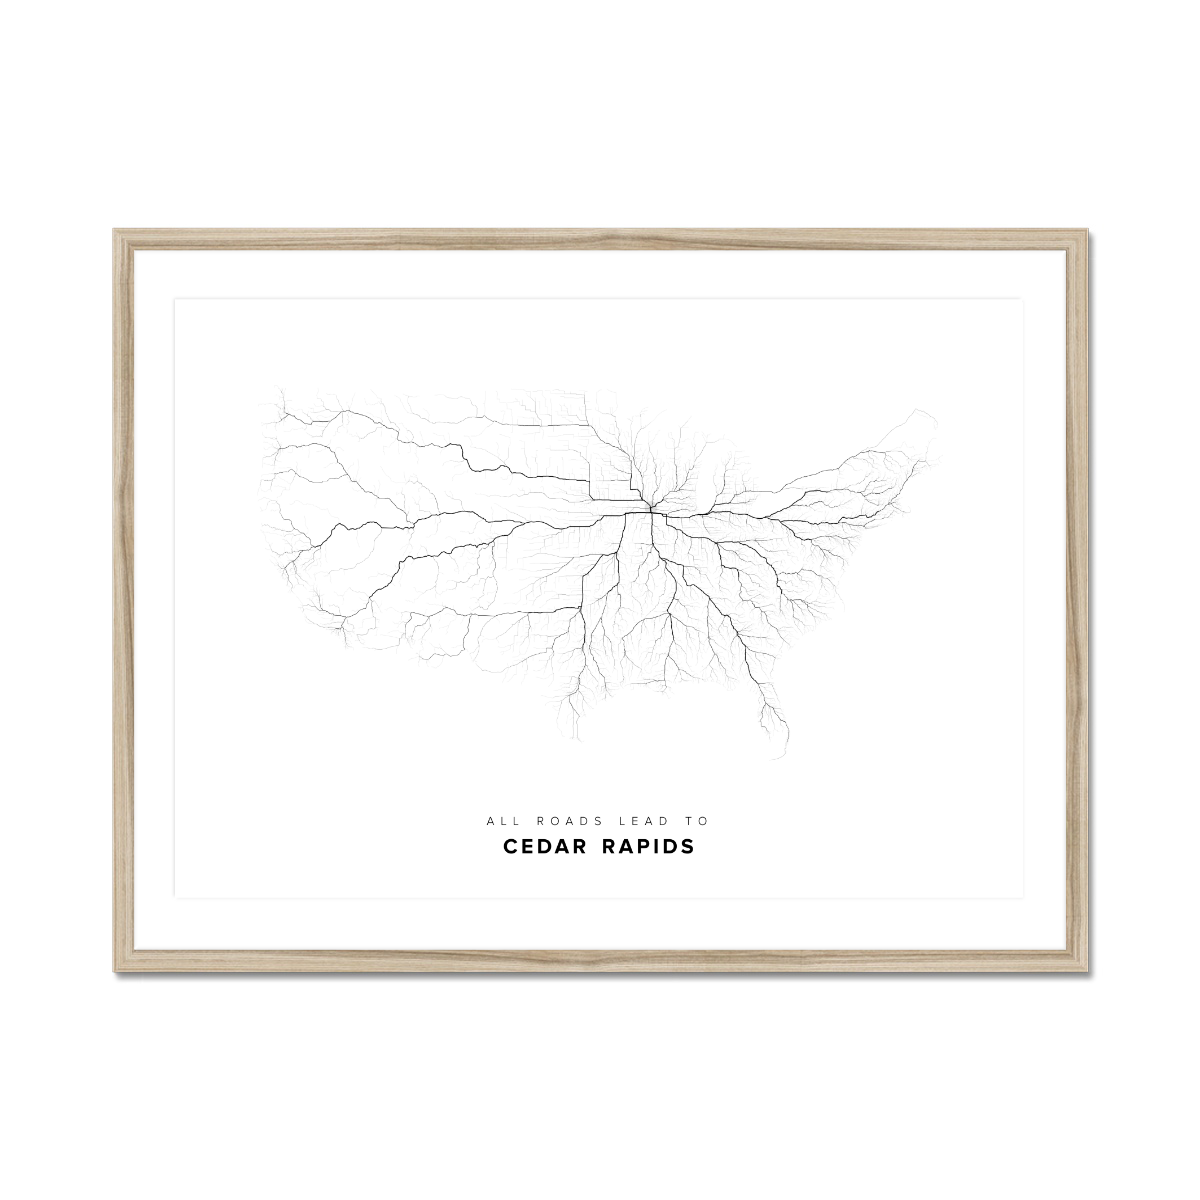 All roads lead to Cedar Rapids (United States of America) Fine Art Map Print